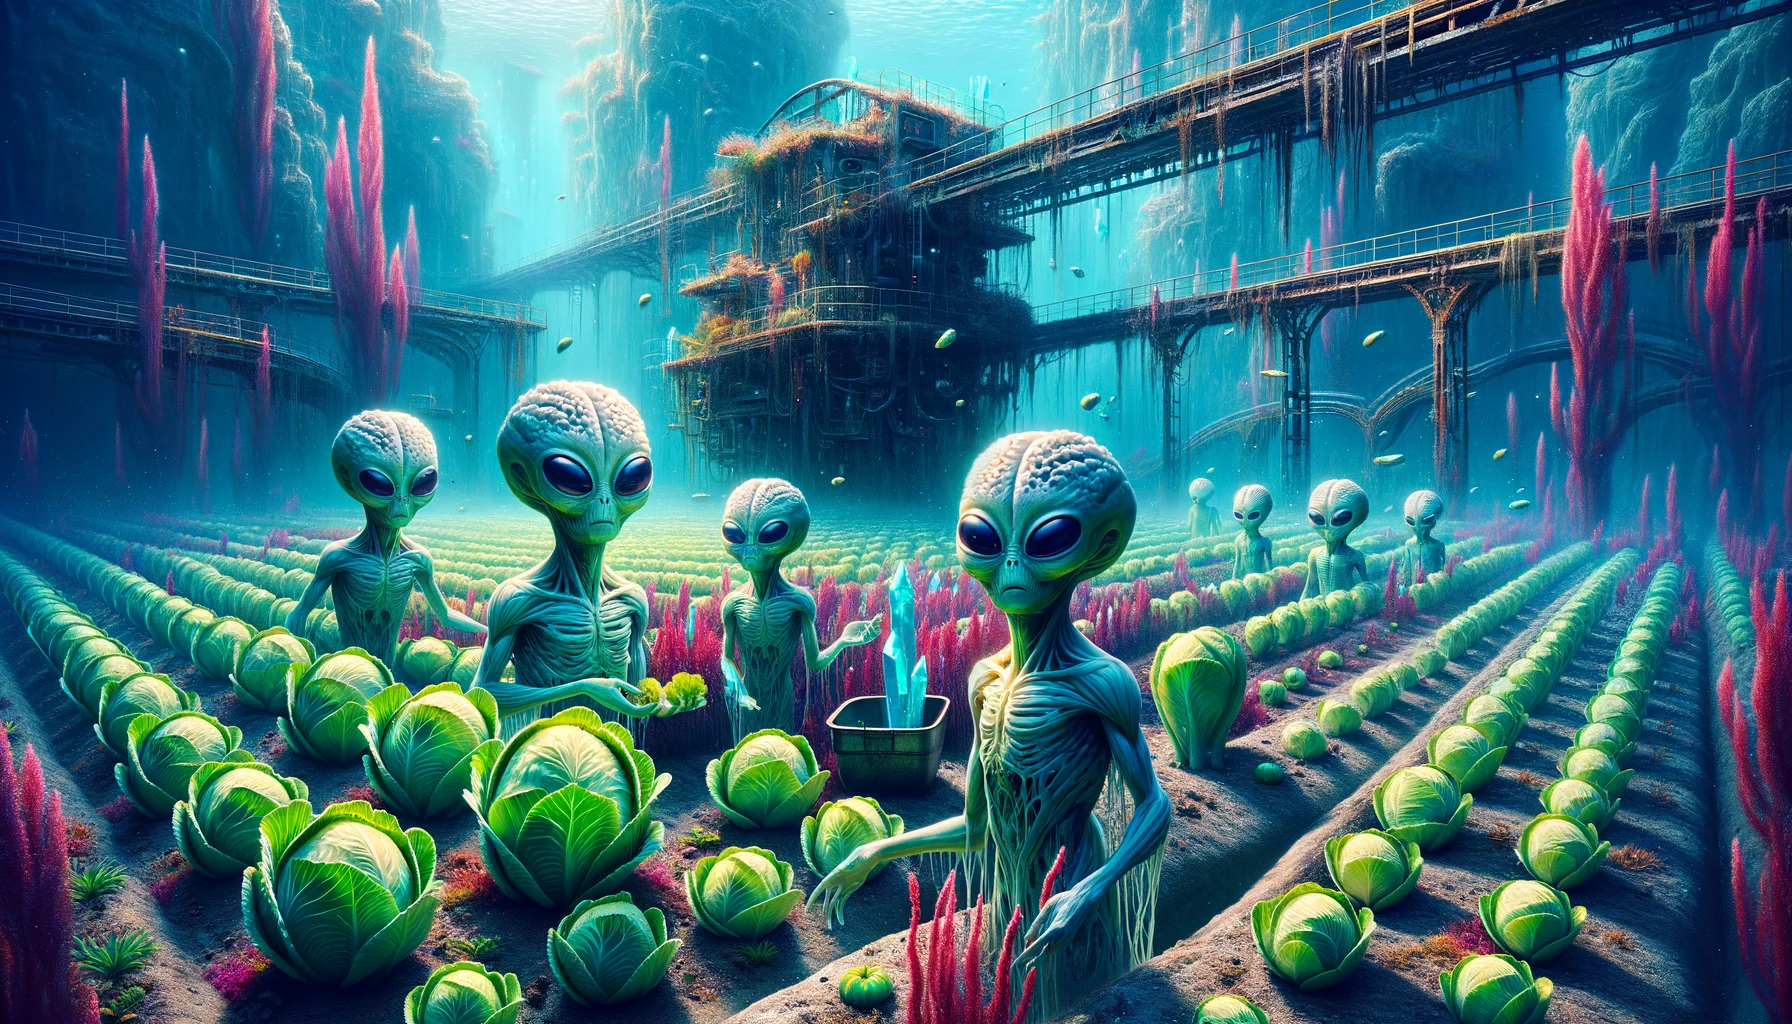 aliens growing cabbage under water